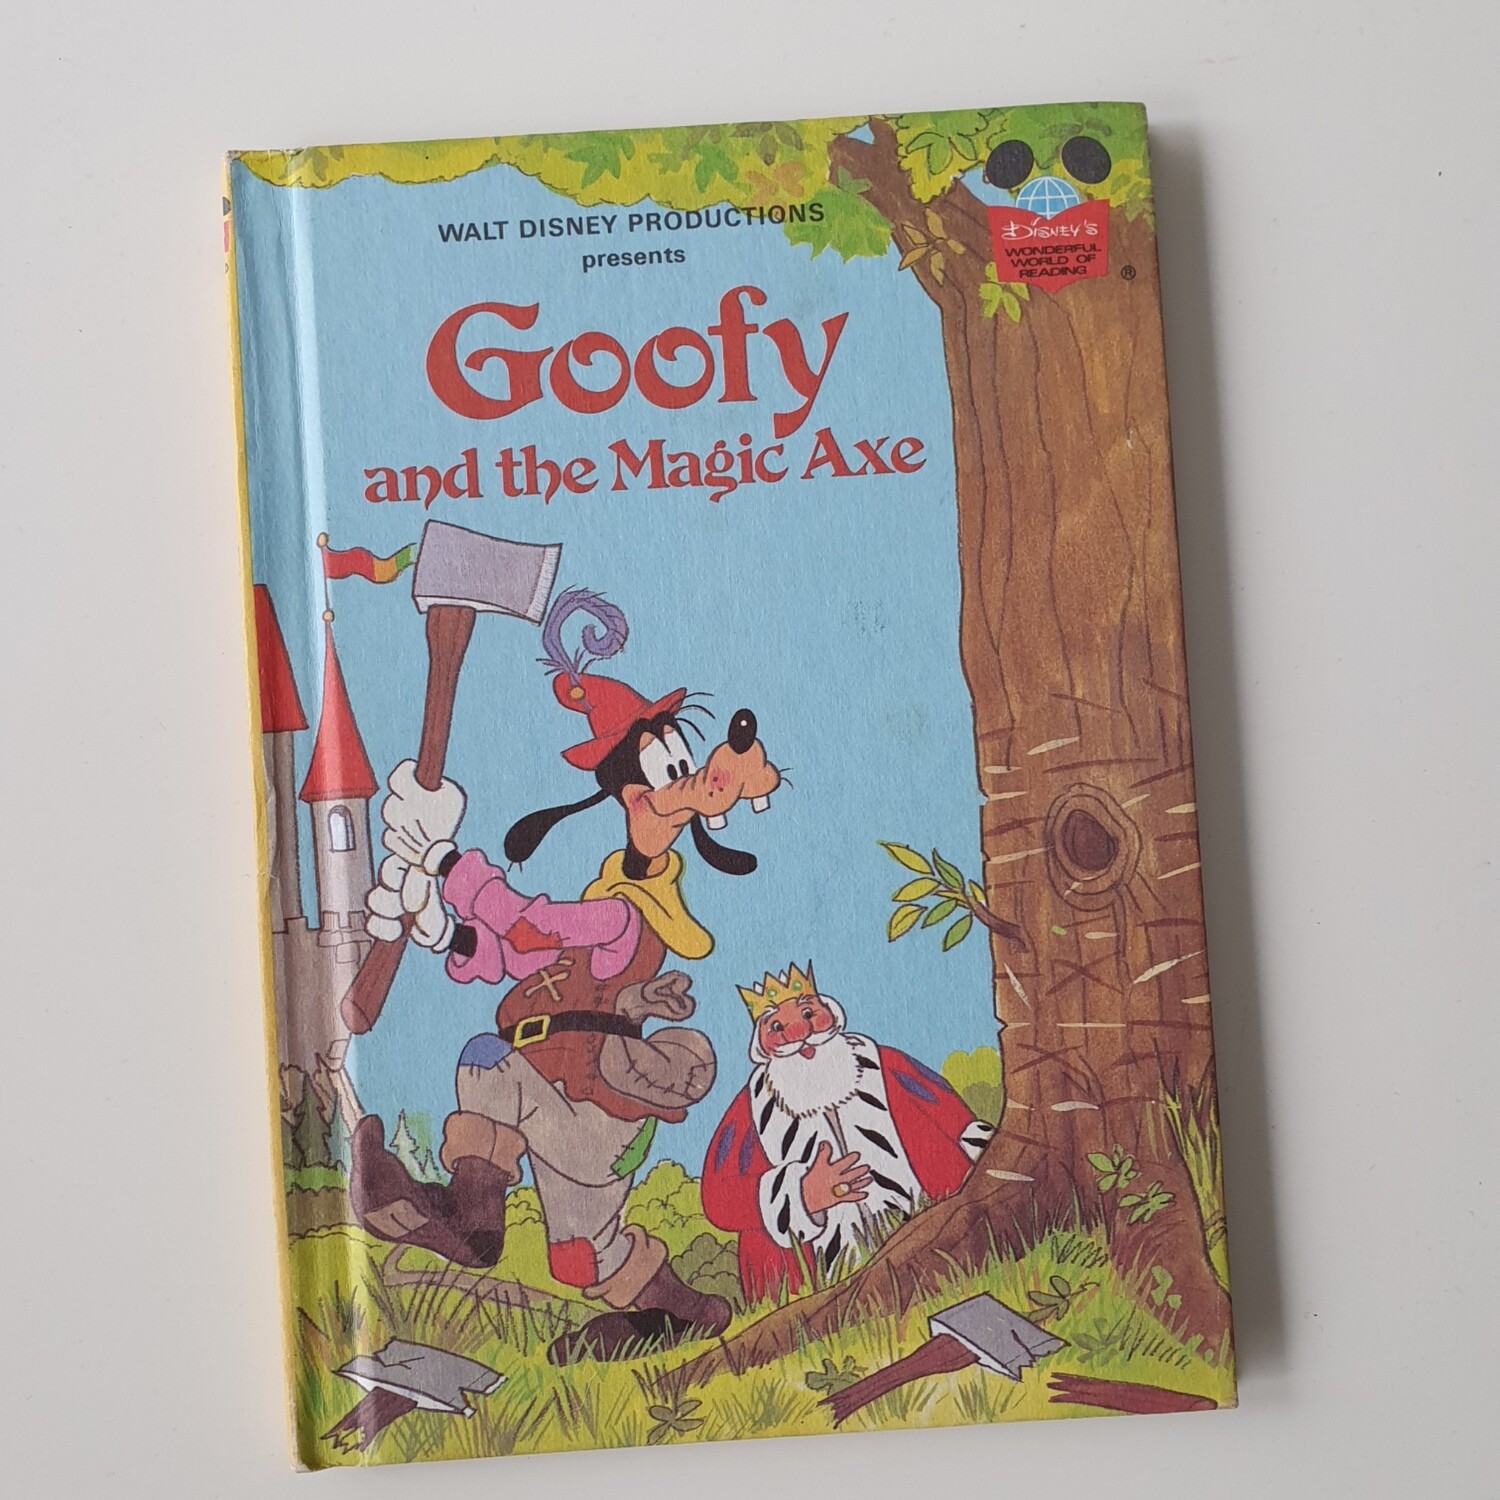 Goofy and the Magic Axe